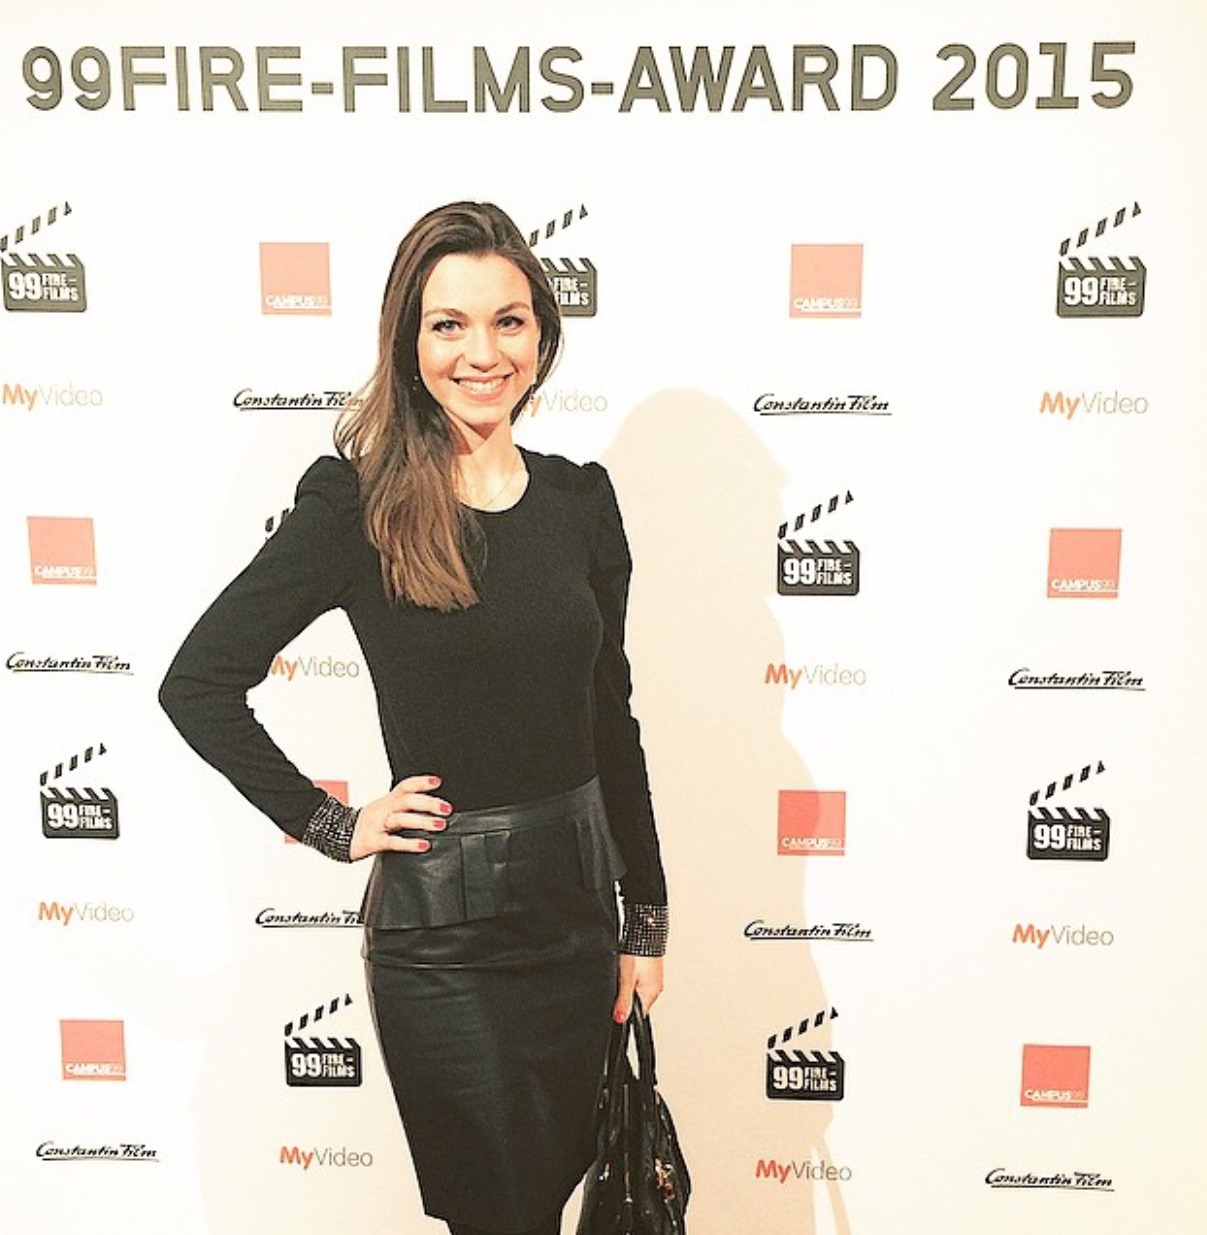 99Fire-Films-Award 2015 Berlin Admiralspalast